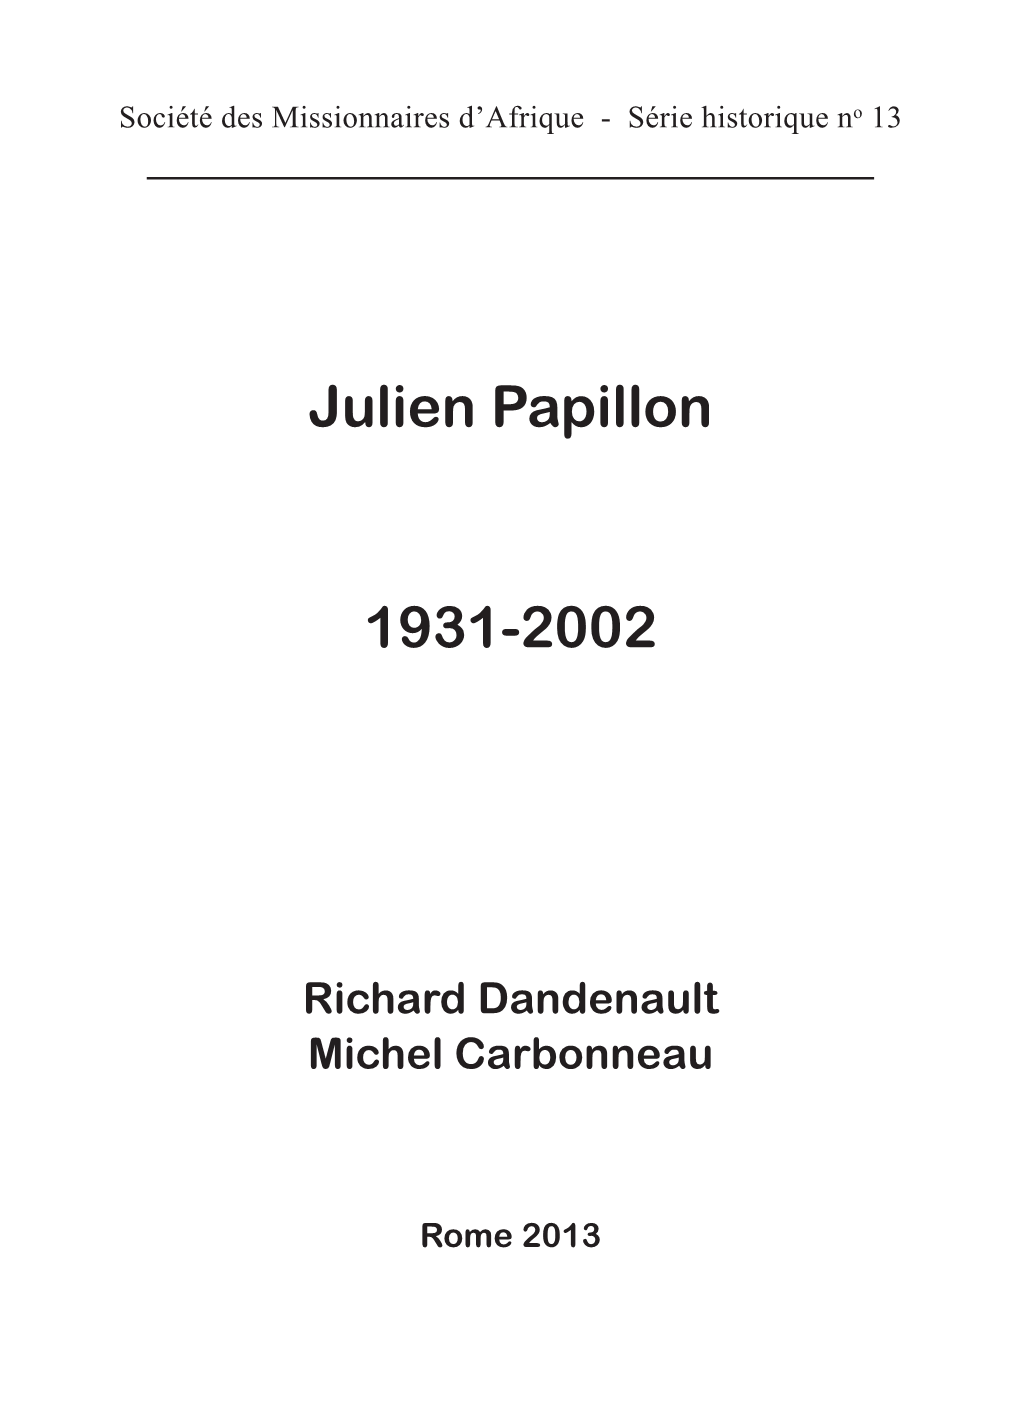 Julien Papillon 1931-2002